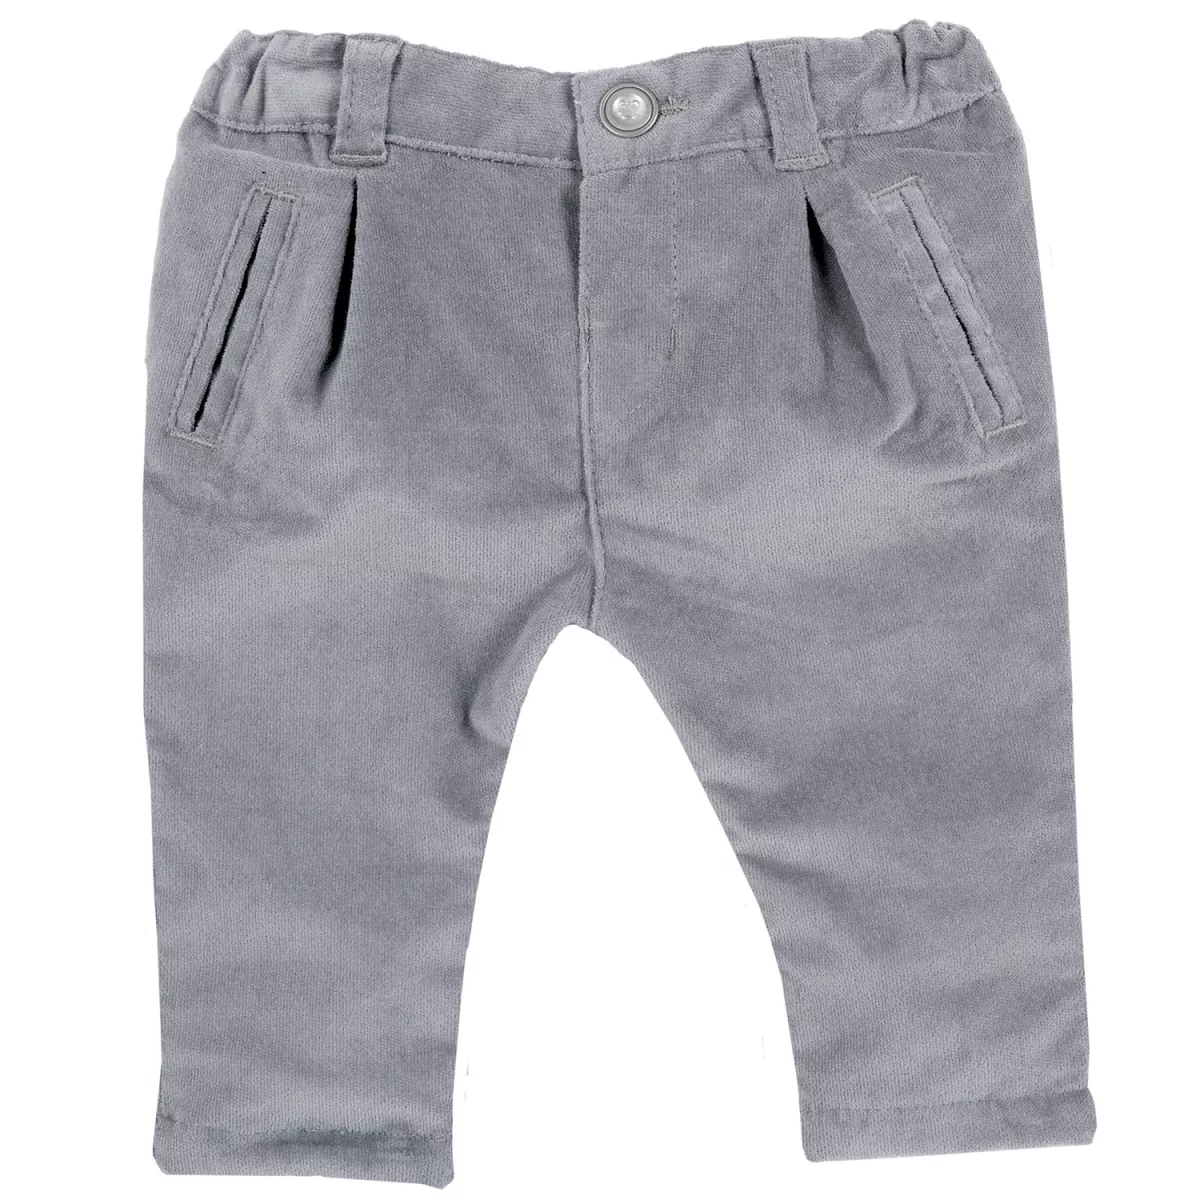 Pantalon copii Chicco, gri inchis, 68